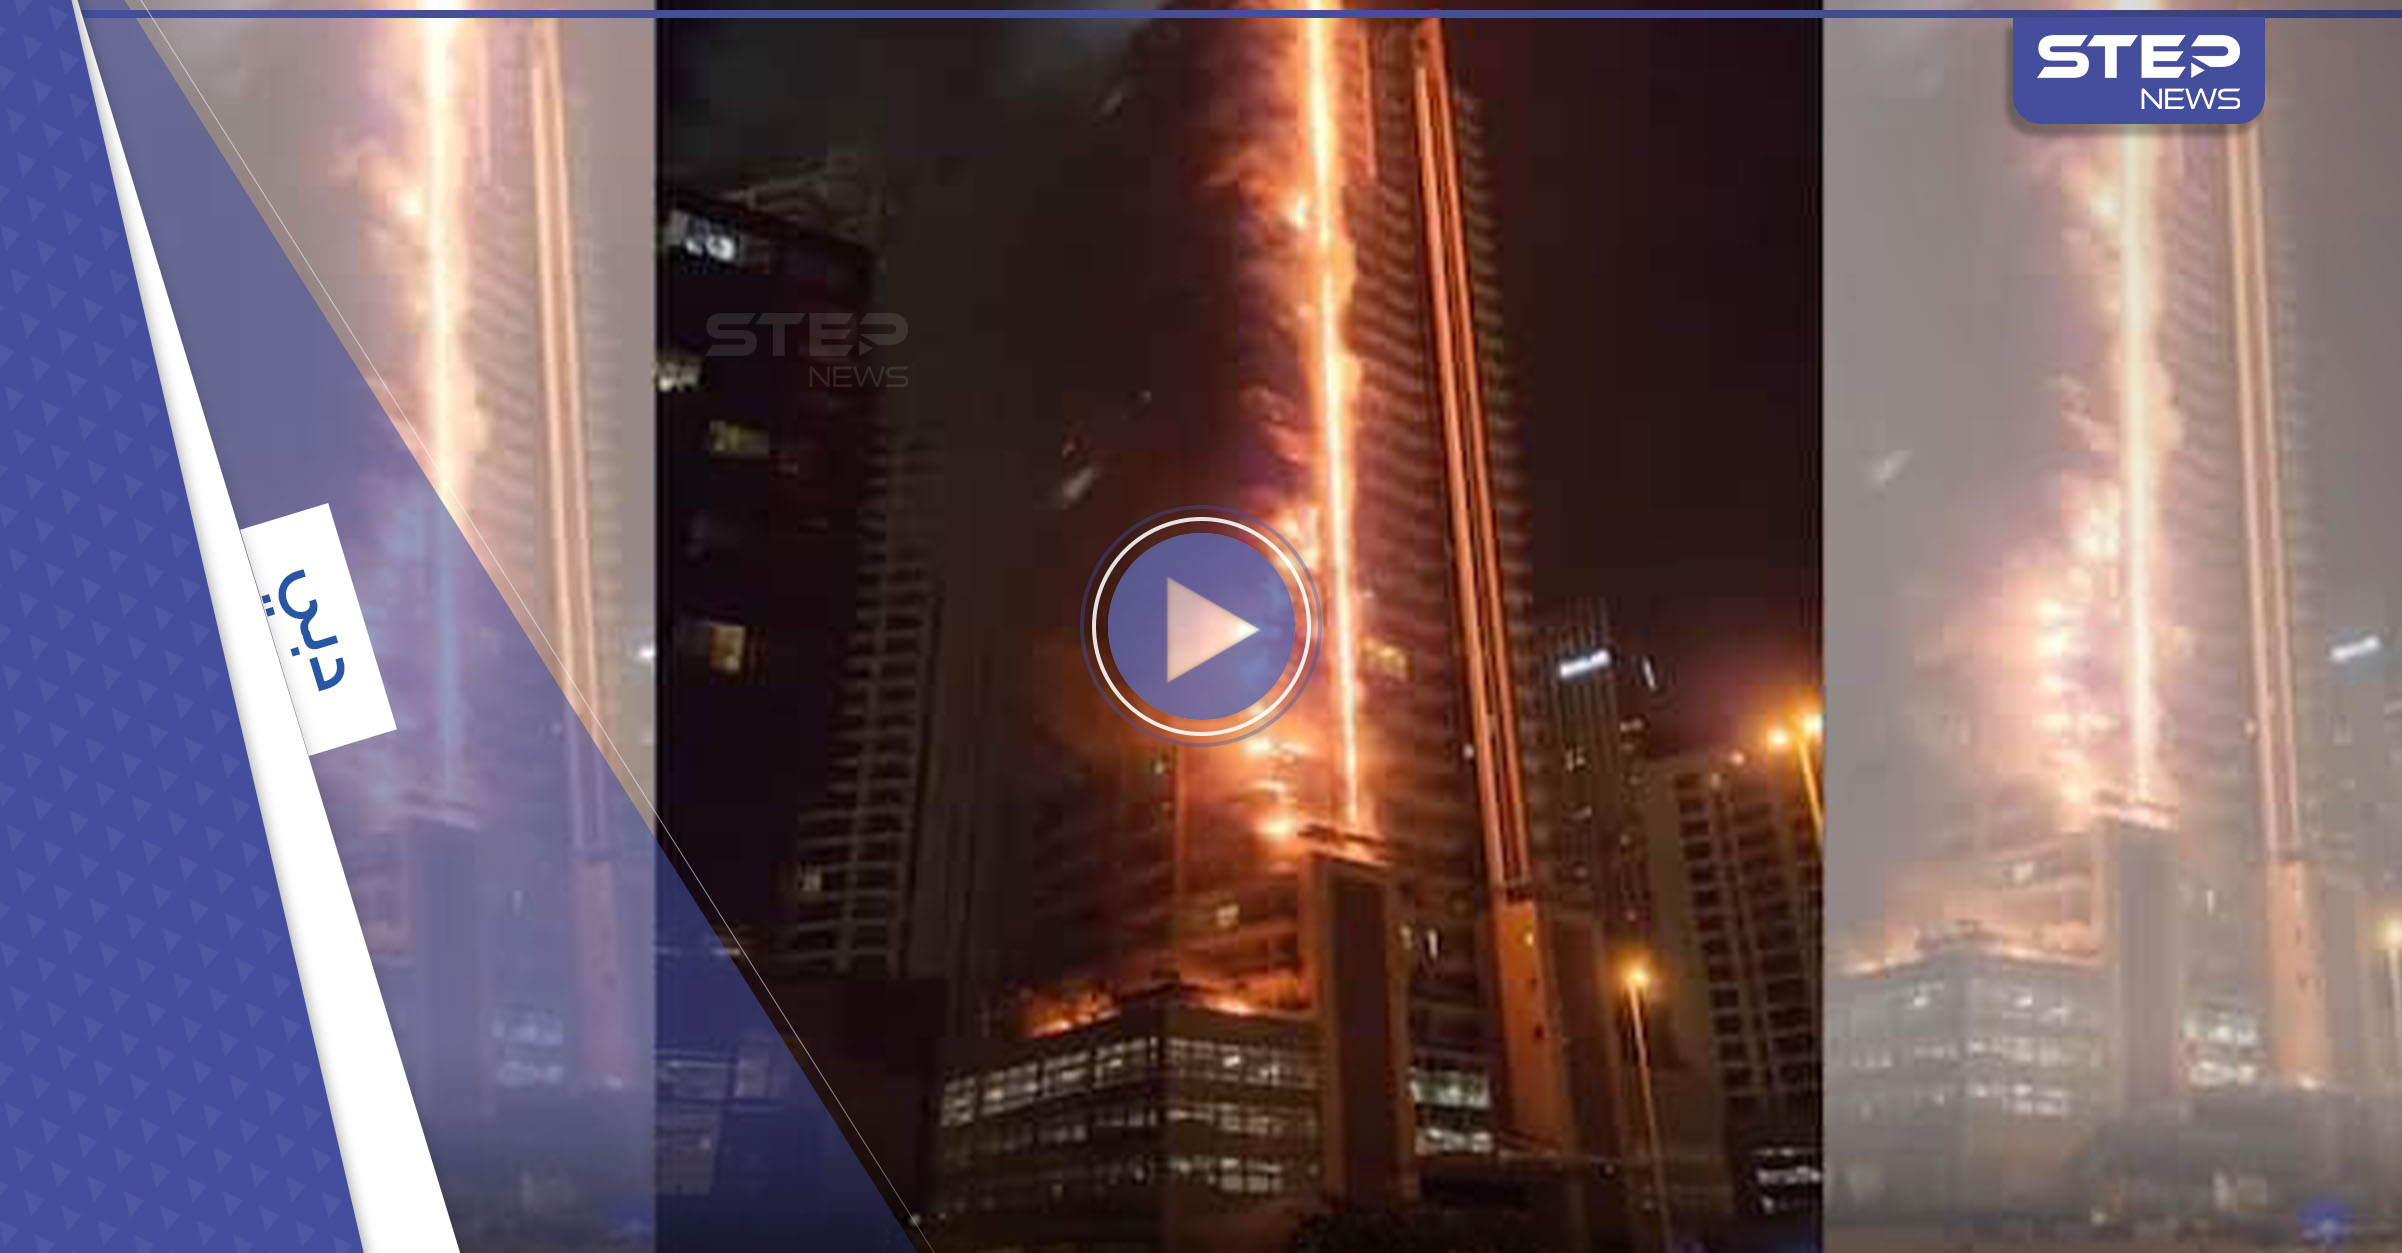 حريق ضخم قرب برج خليفة